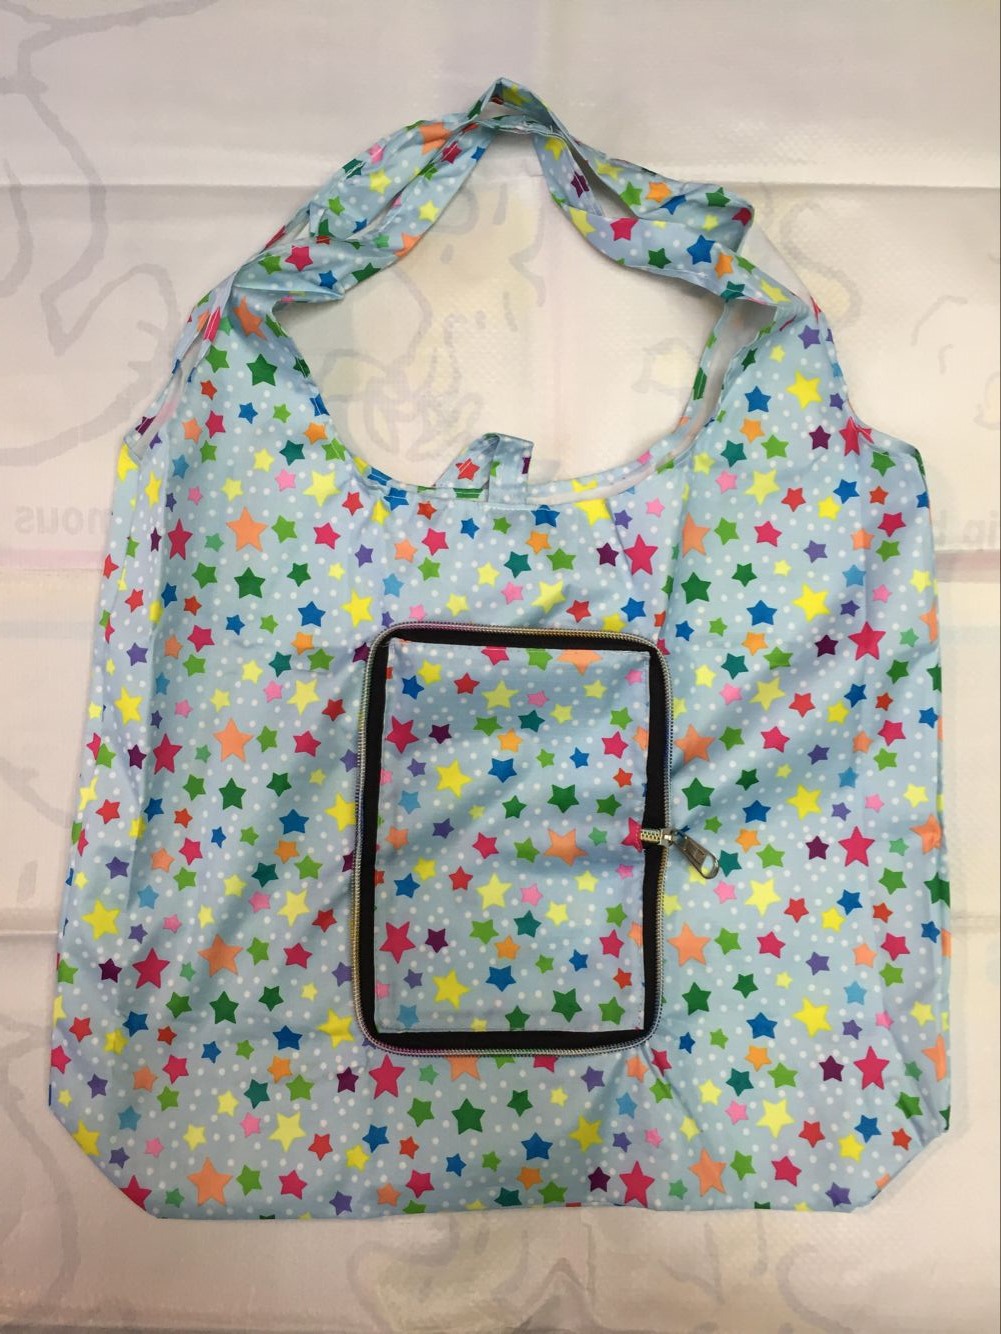 Waterproof zipper environmental protection bag3